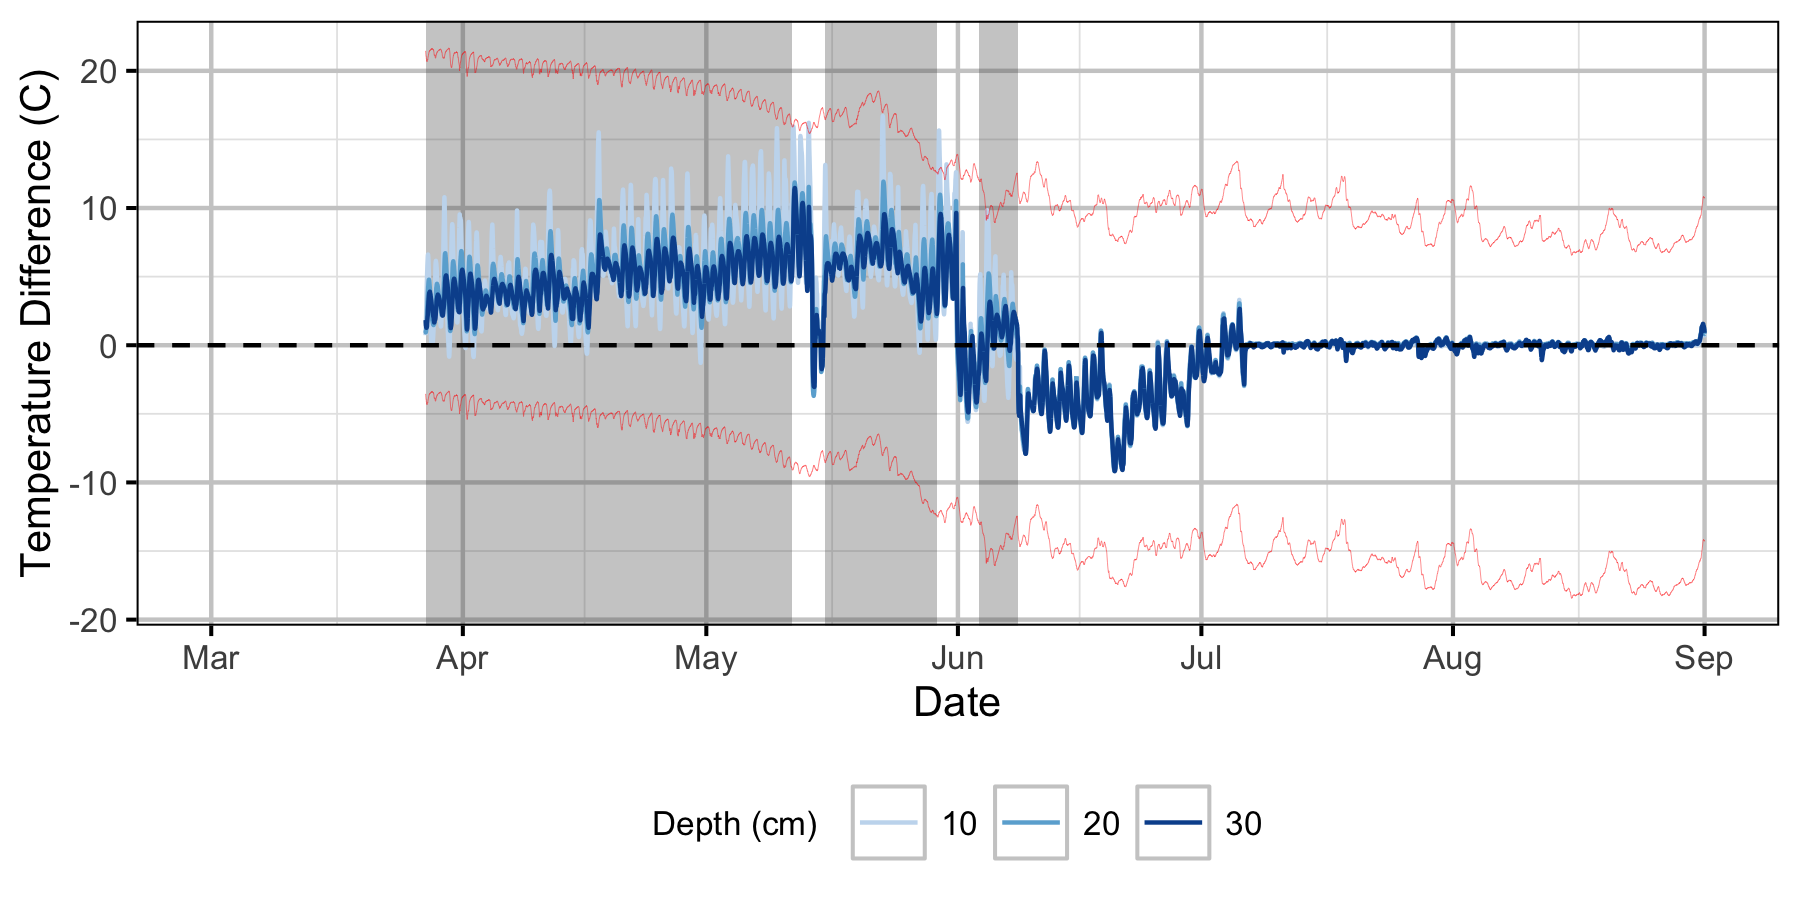 figures/Sensor Data/Relative Gravel Temperature Stations/Norns Creek Fan/Station02.png